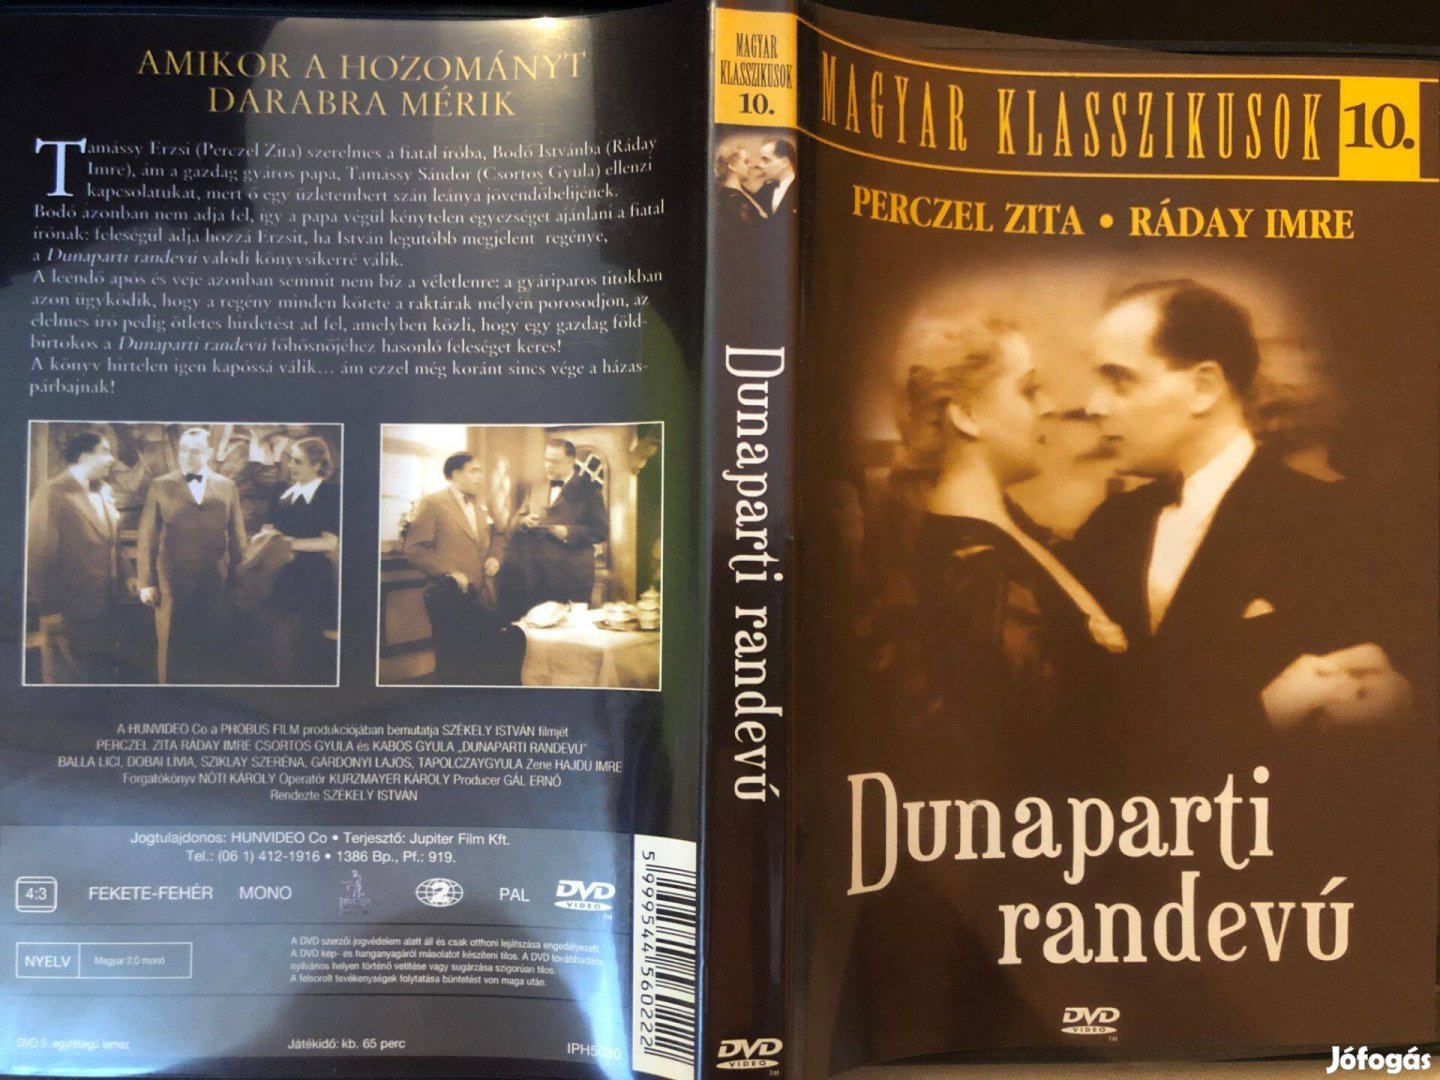 Dunaparti randevú DVD - Magyar klasszikusok 10. (Perczel Zita)